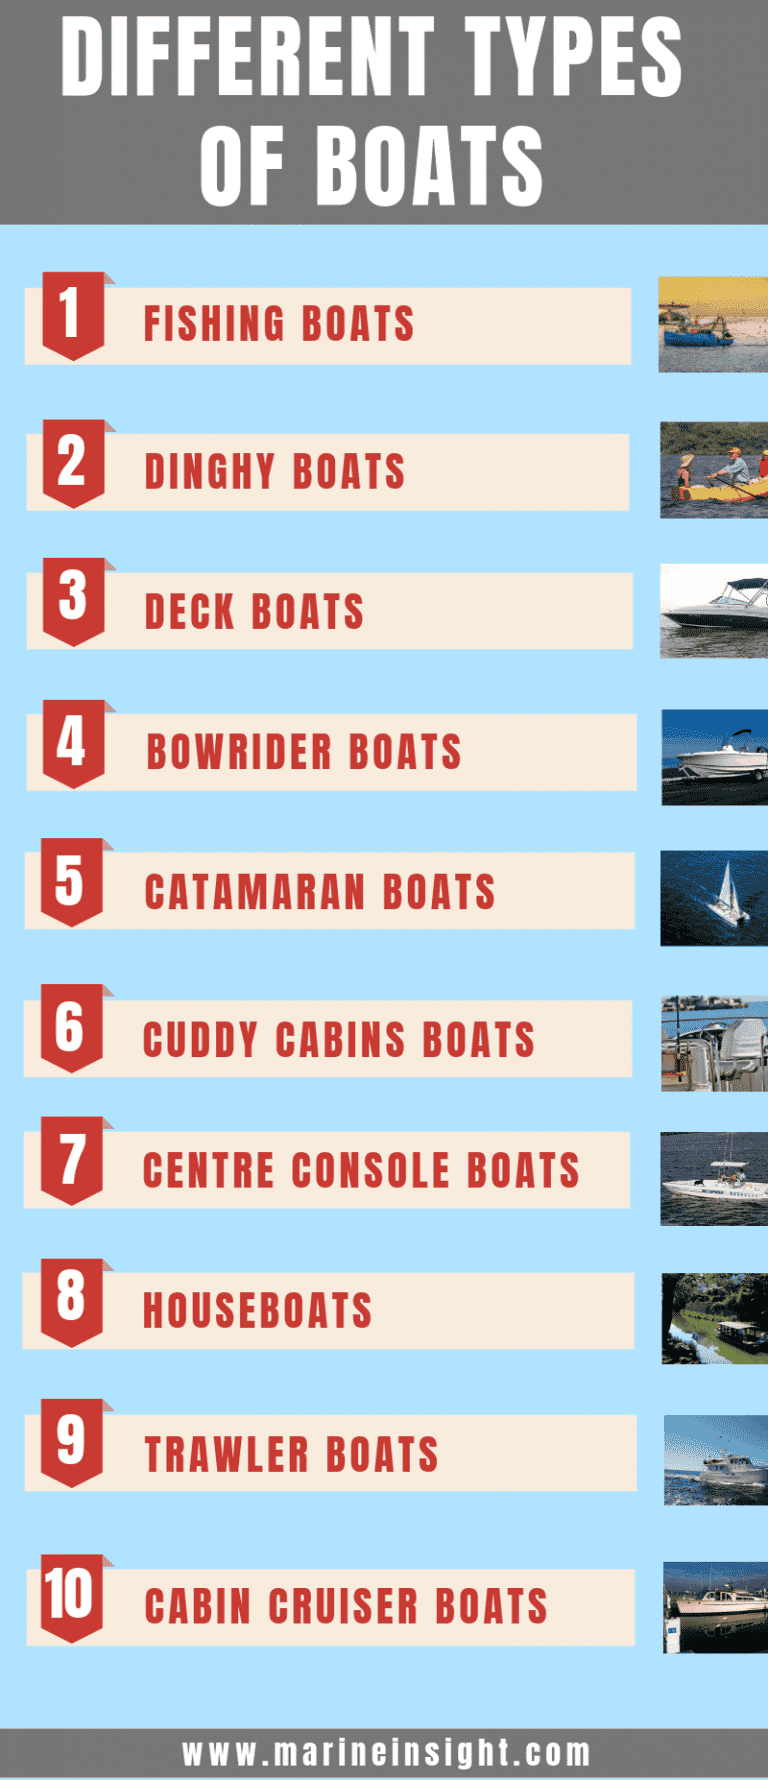 tour boat names